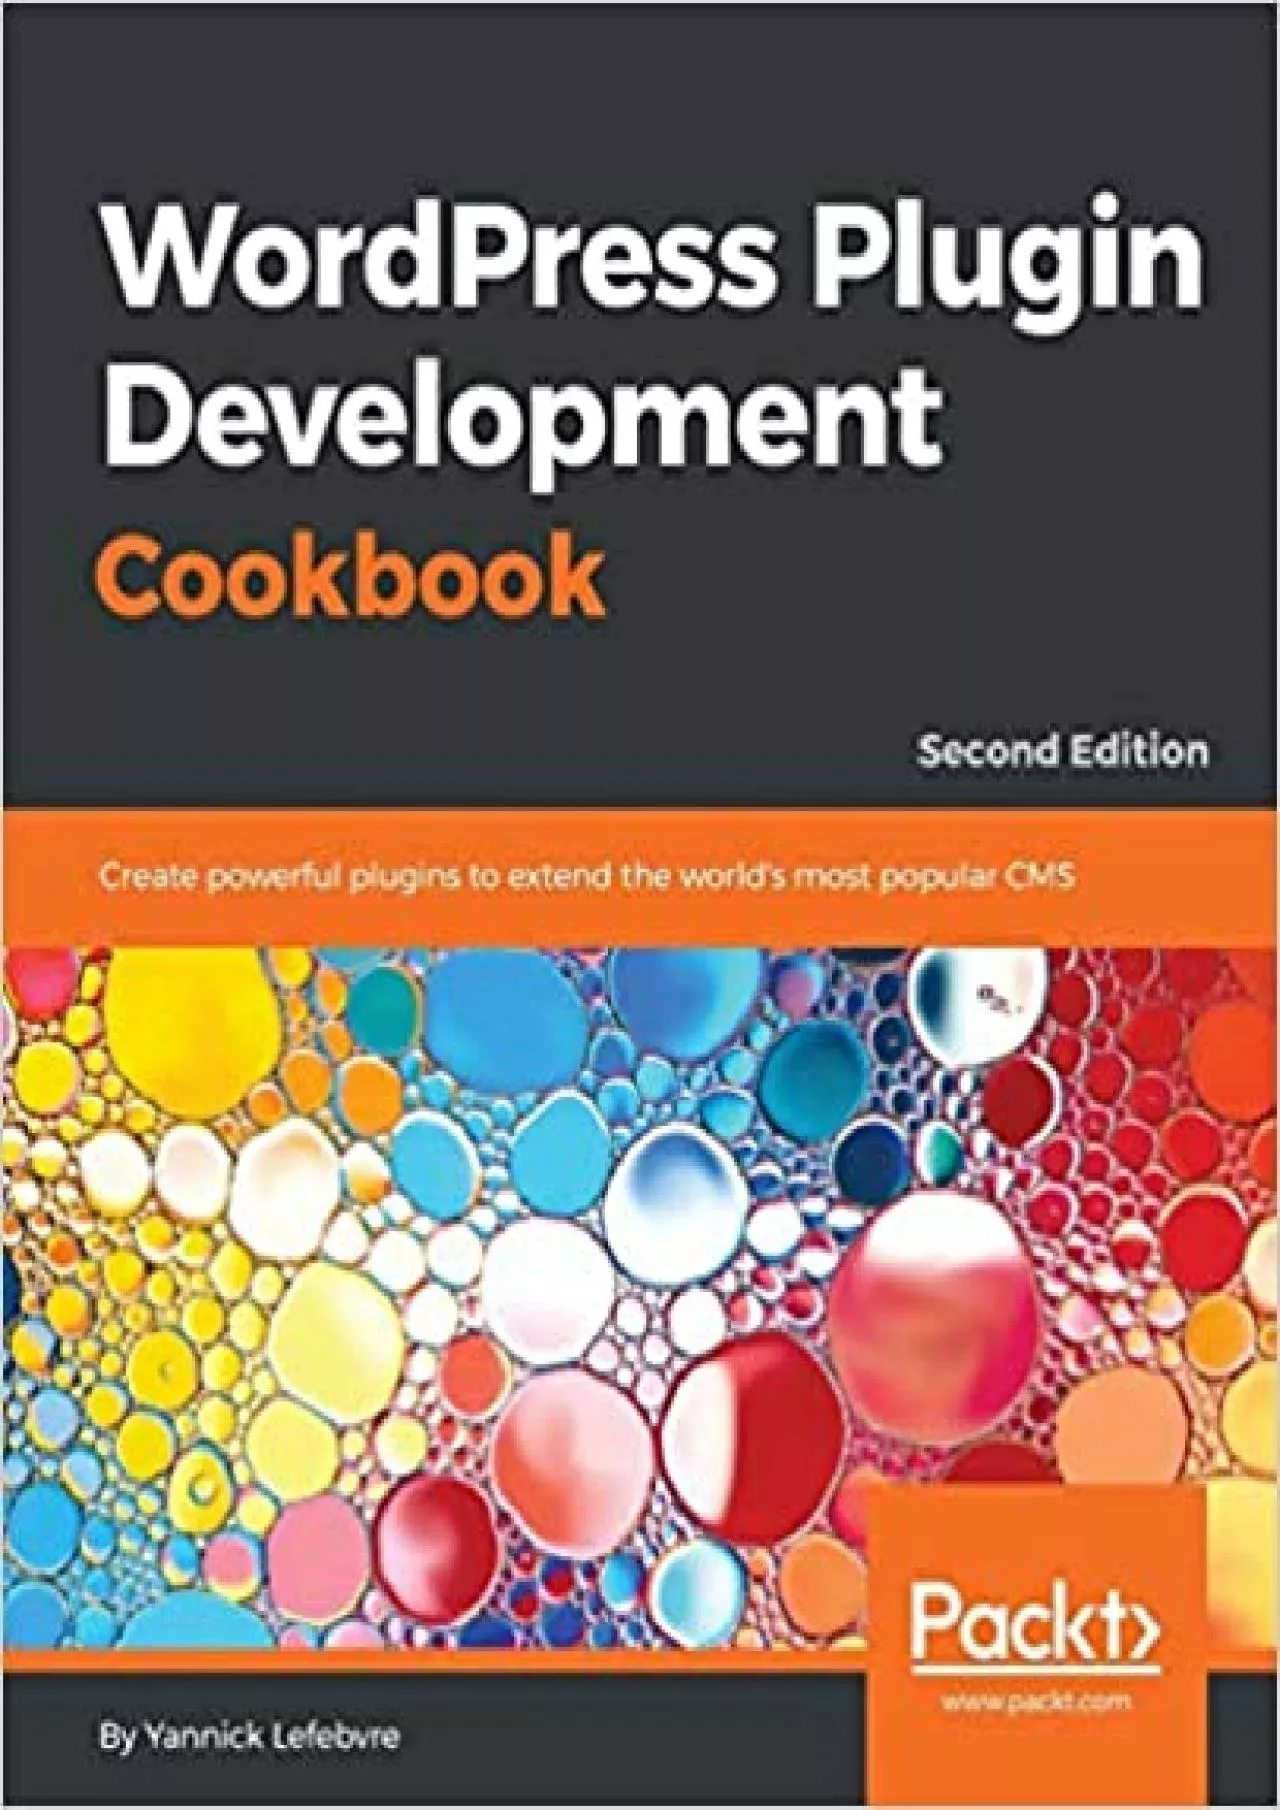 (DOWNLOAD)-WordPress Plugin Development Cookbook: Create powerful plugins to extend the